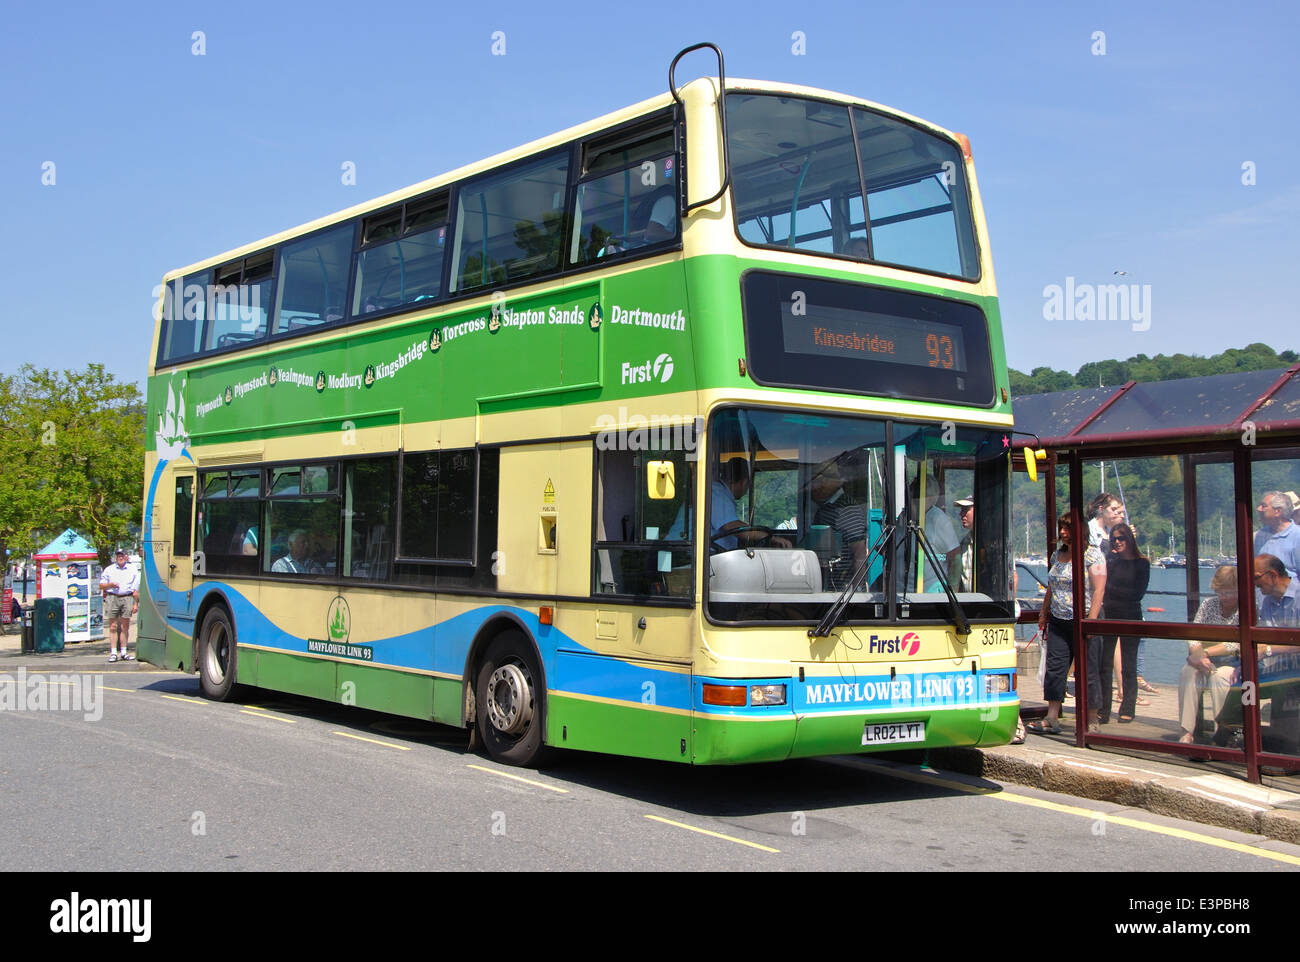 First Group, Mayflower Link 93, double decker bus, Dartmouth, Devon, England, UK Stock Photo